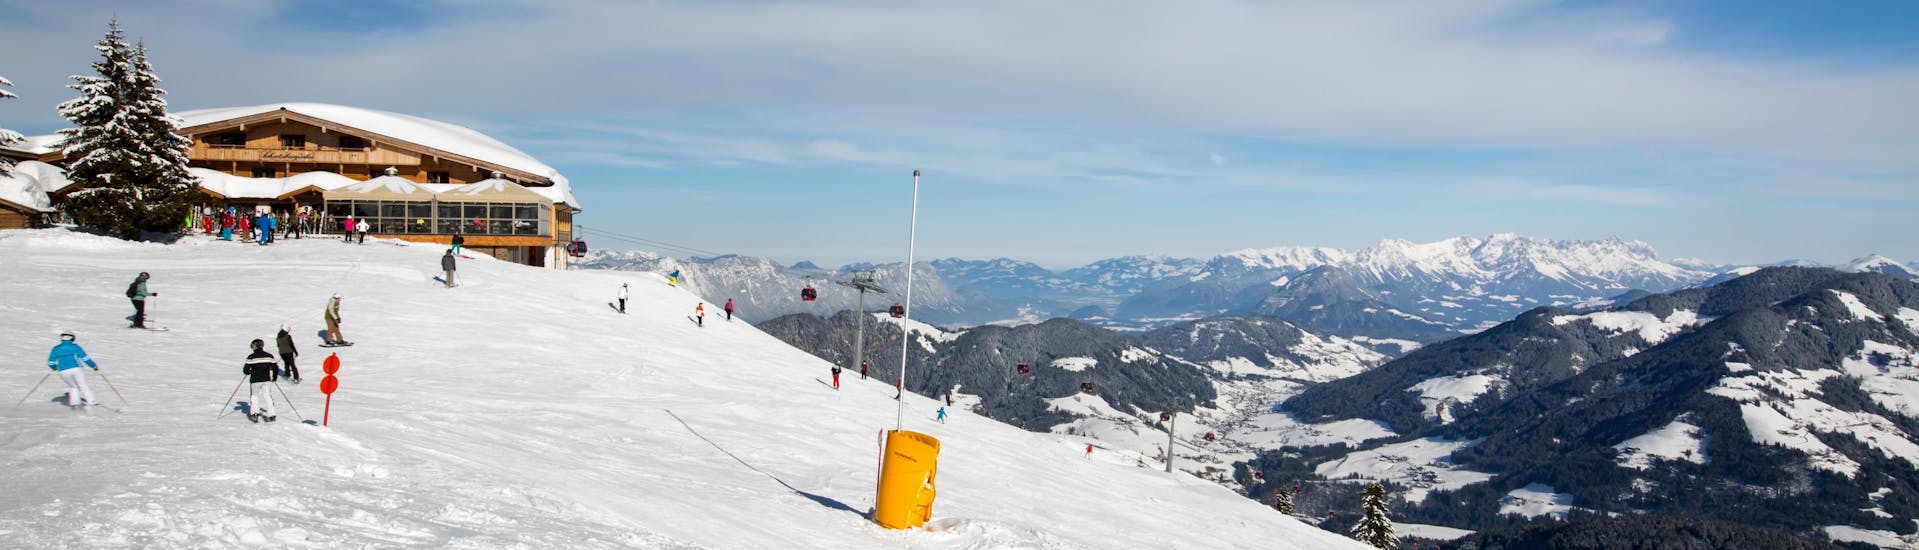 A view of a snowy mountain top in the ski resort of Ski Juwel Alpbachtal Wildschönau, where ski schools gather to start their ski lessons.